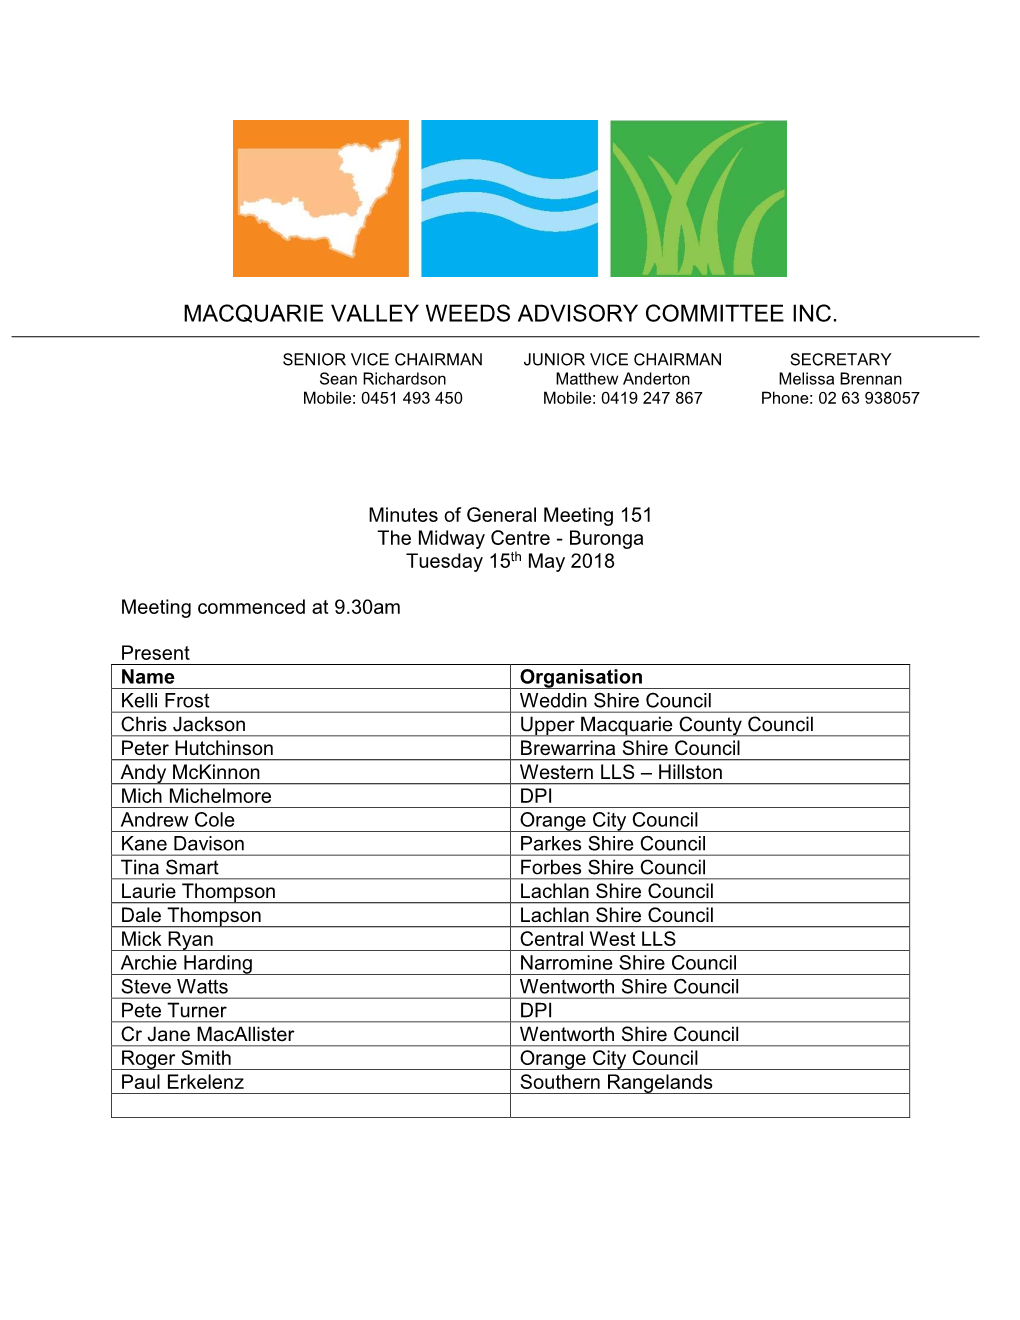 Macquarie Valley Weeds Advisory Committee Inc